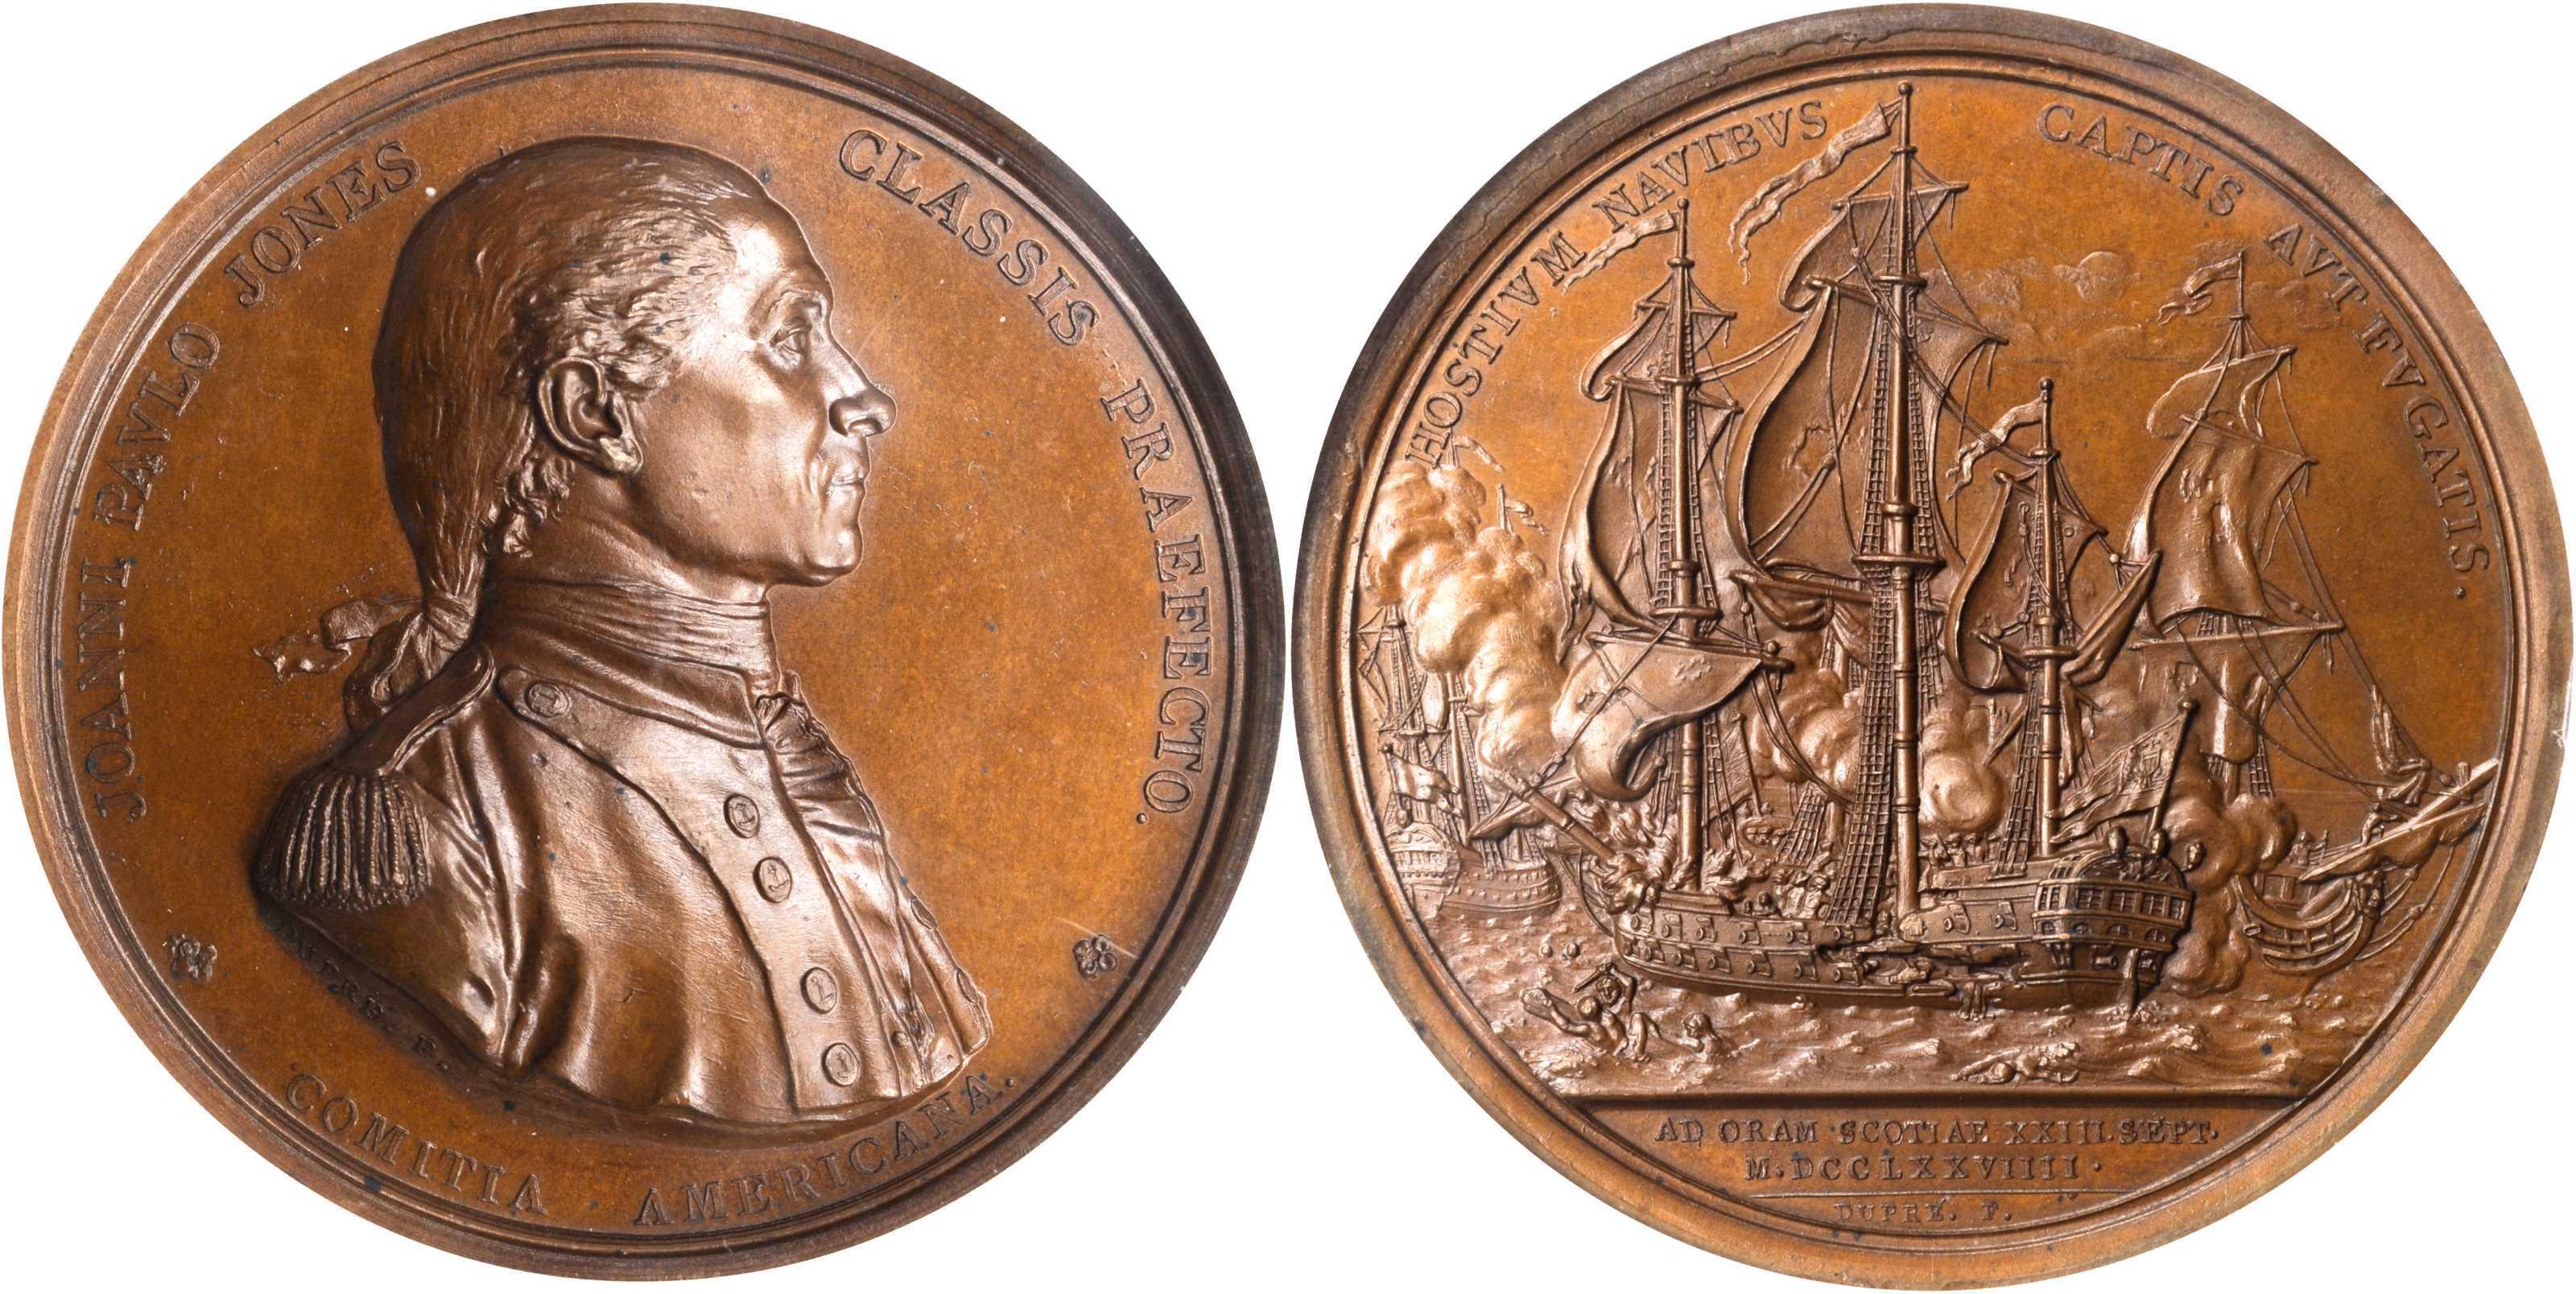 GREAT NAVAL VICTORY 1779  John Paul Jones Solid Bronze Medal Uncirculated 